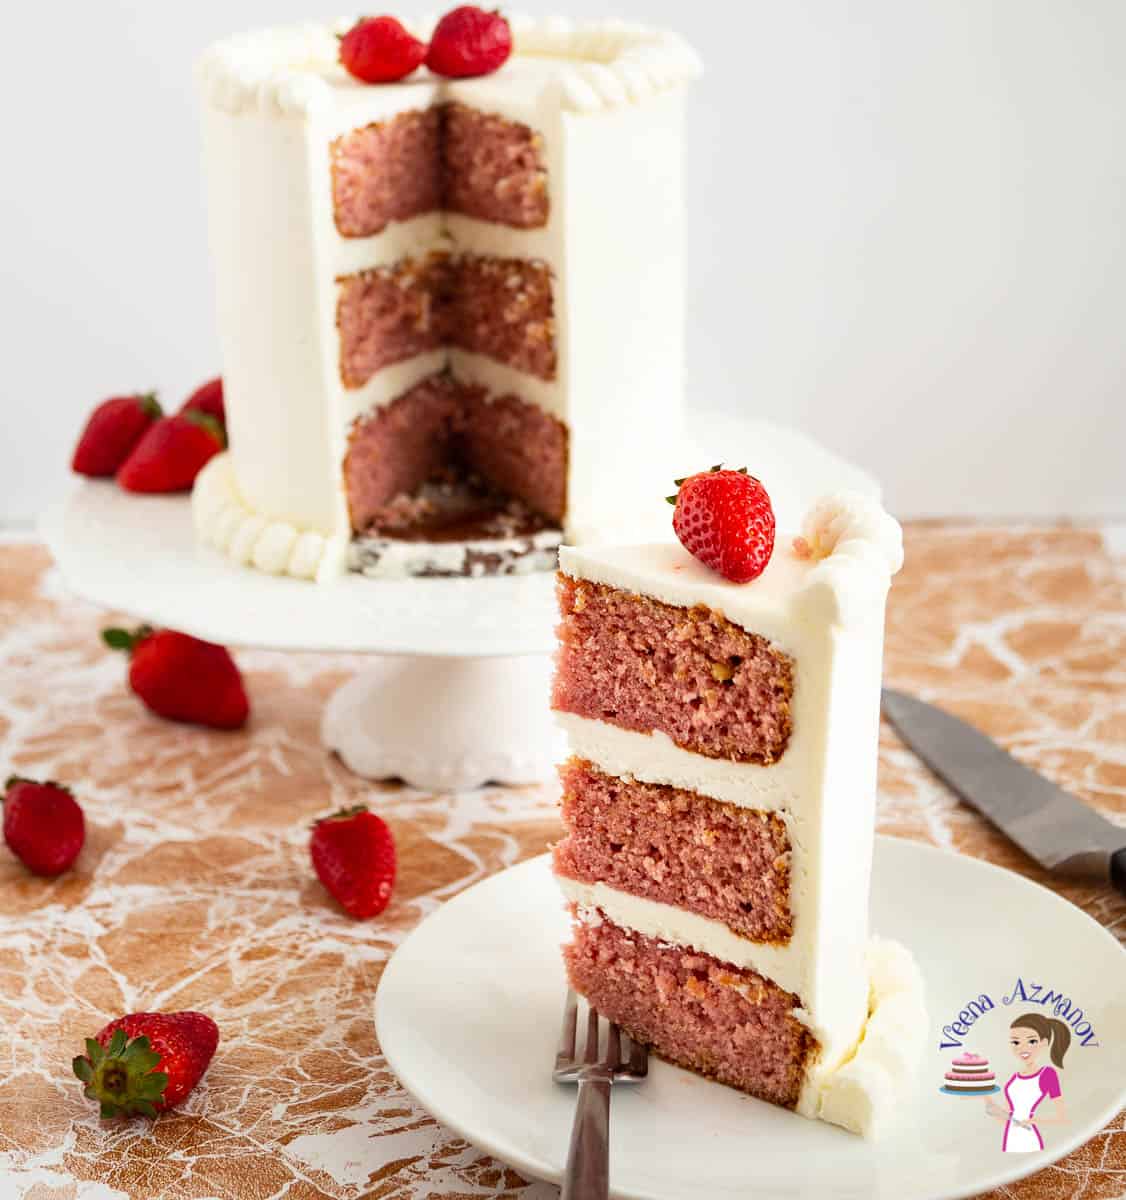 A sliced strawberry cake